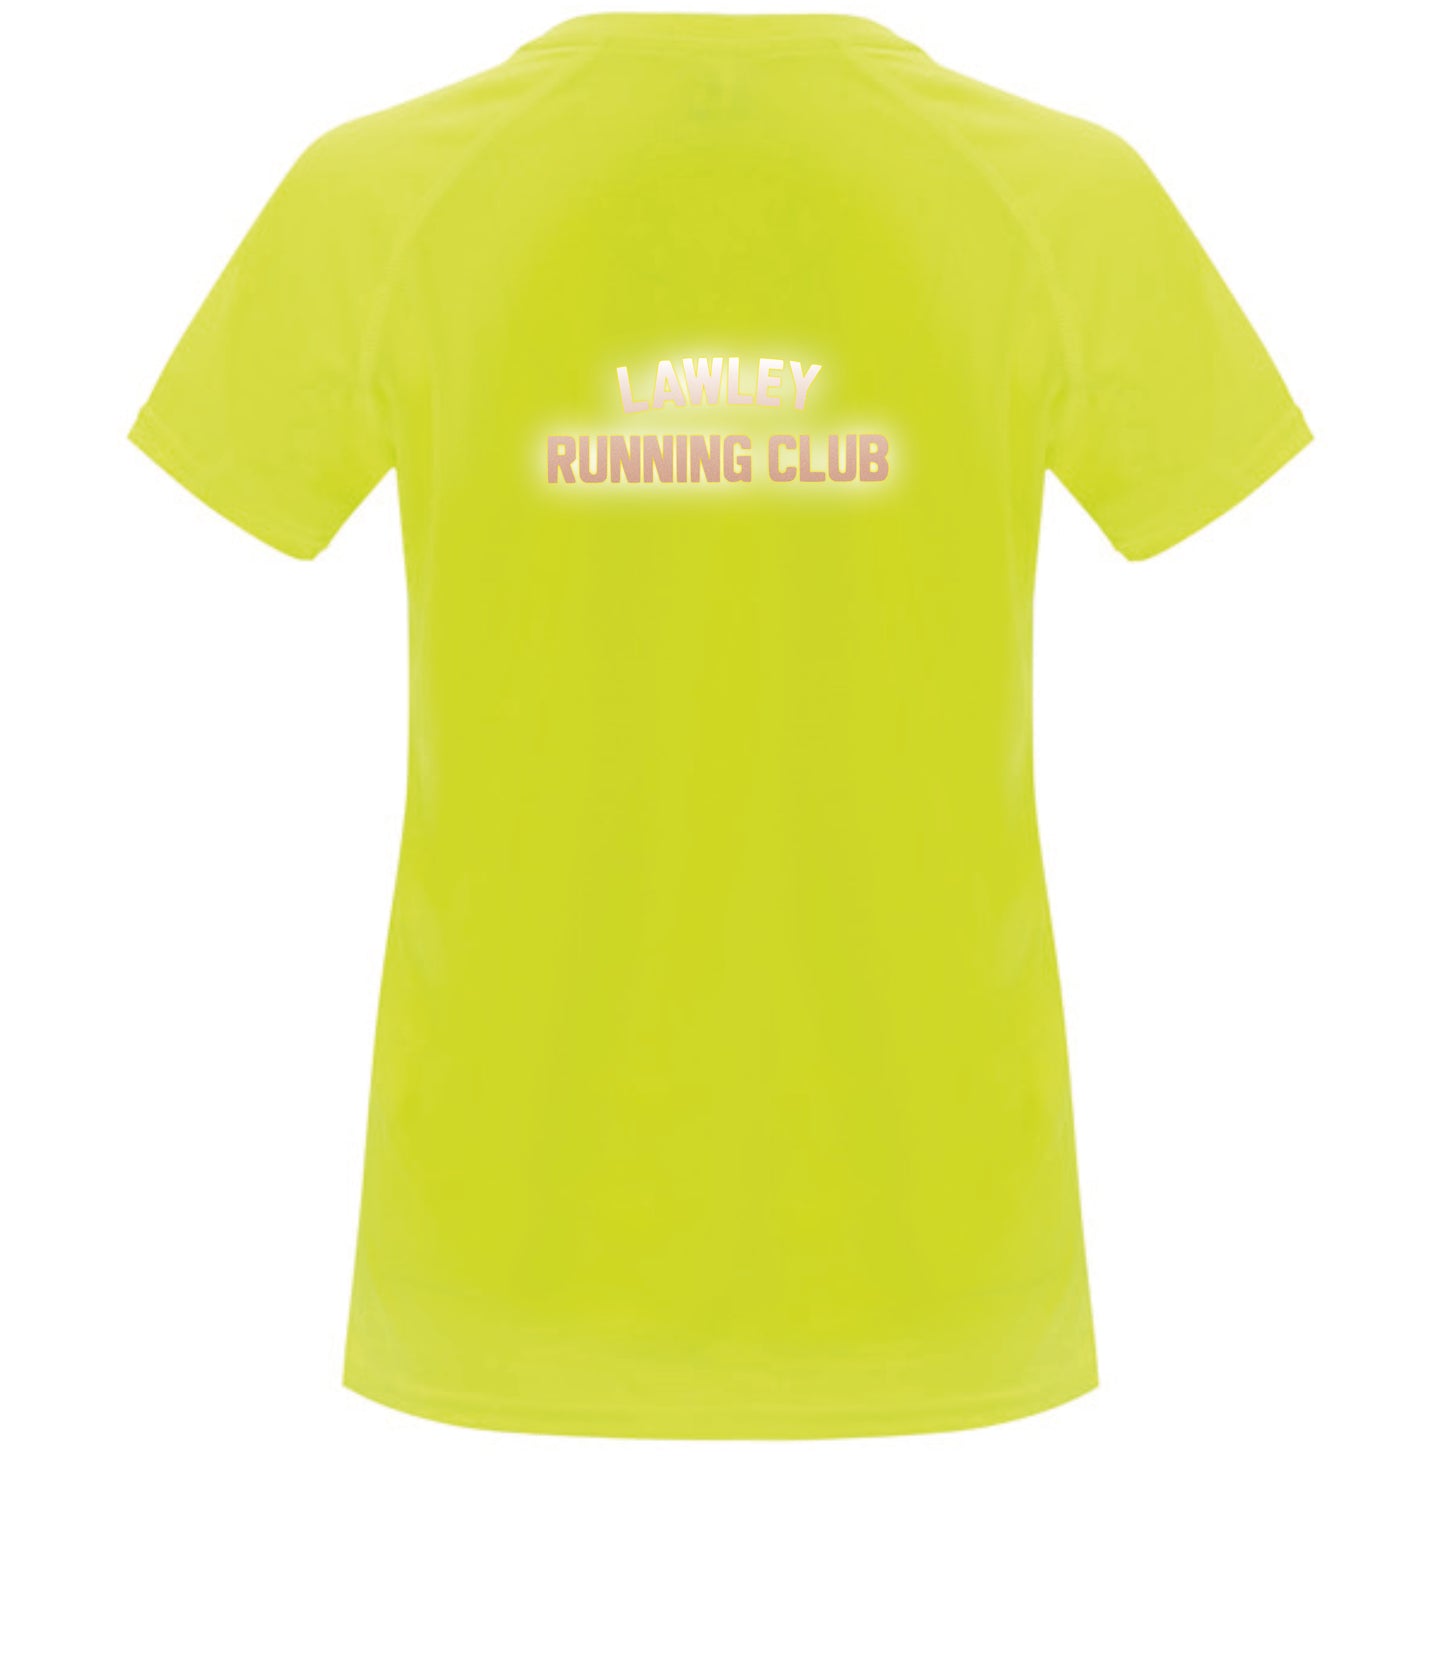 Lawley Running Club Ladies tech tee Yellow